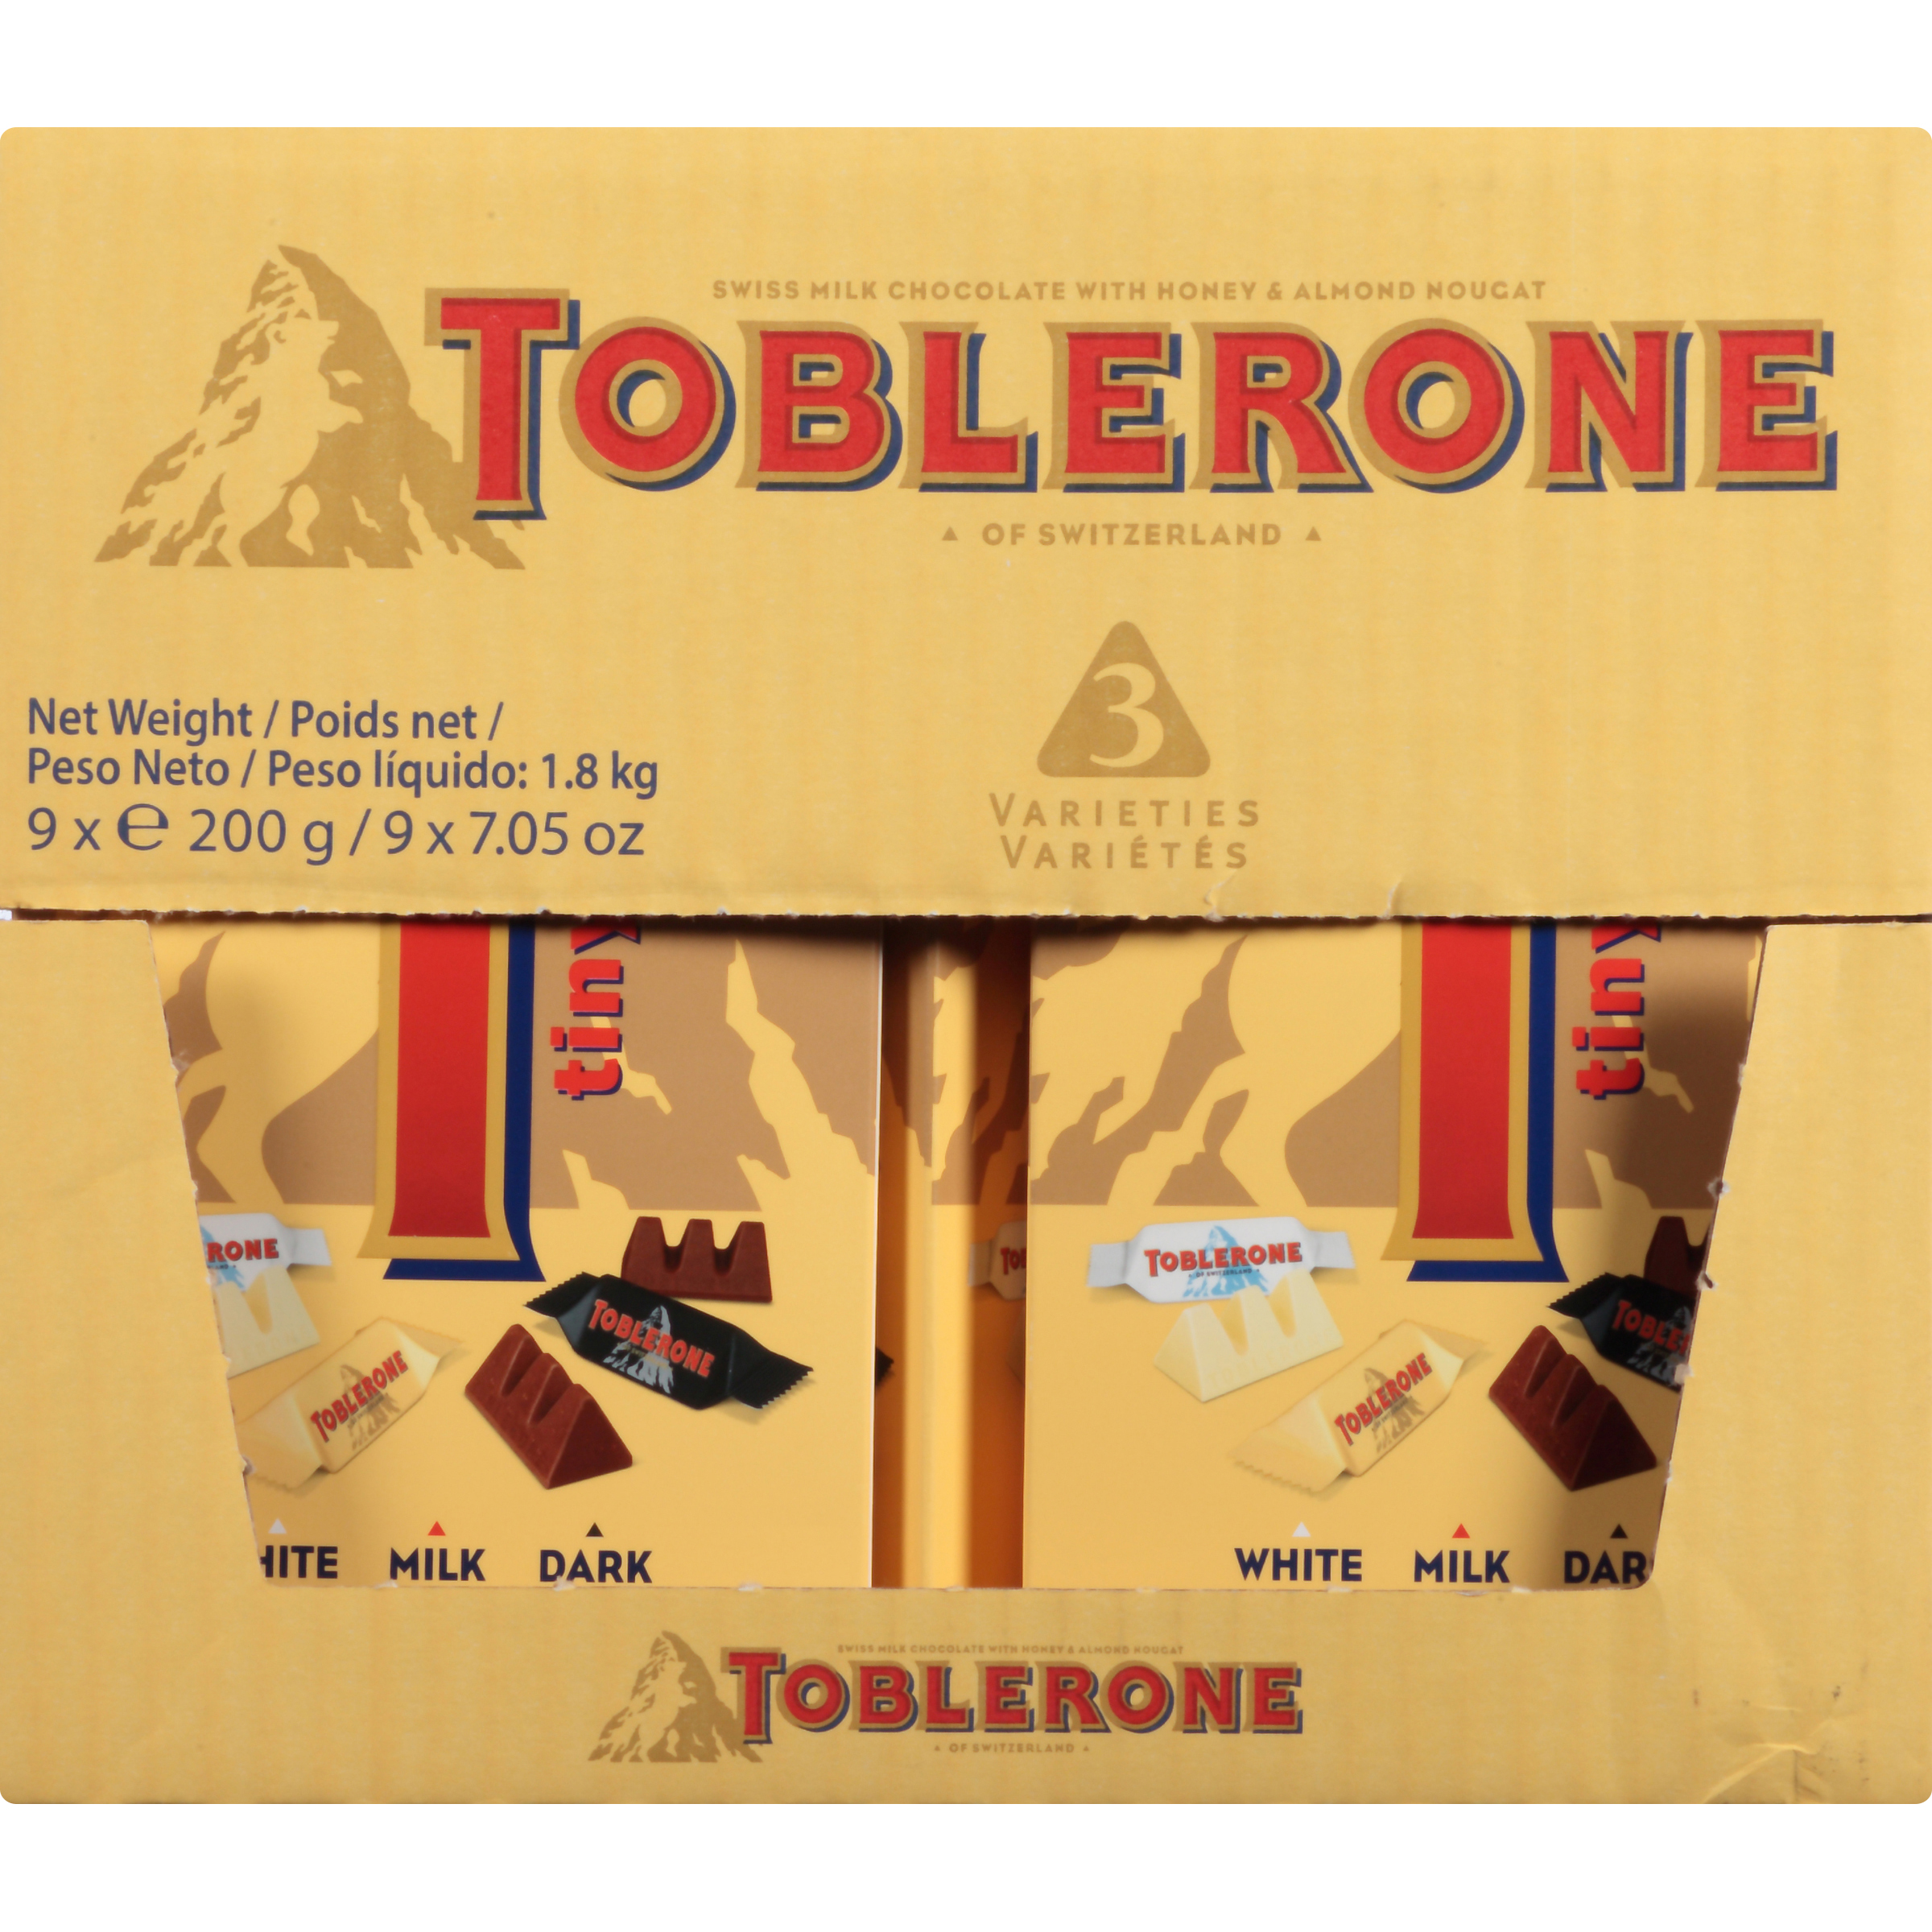 TOBLERONE Tiny Variety Pack - White, Milk and Dark Chocolate 7.05 OZ